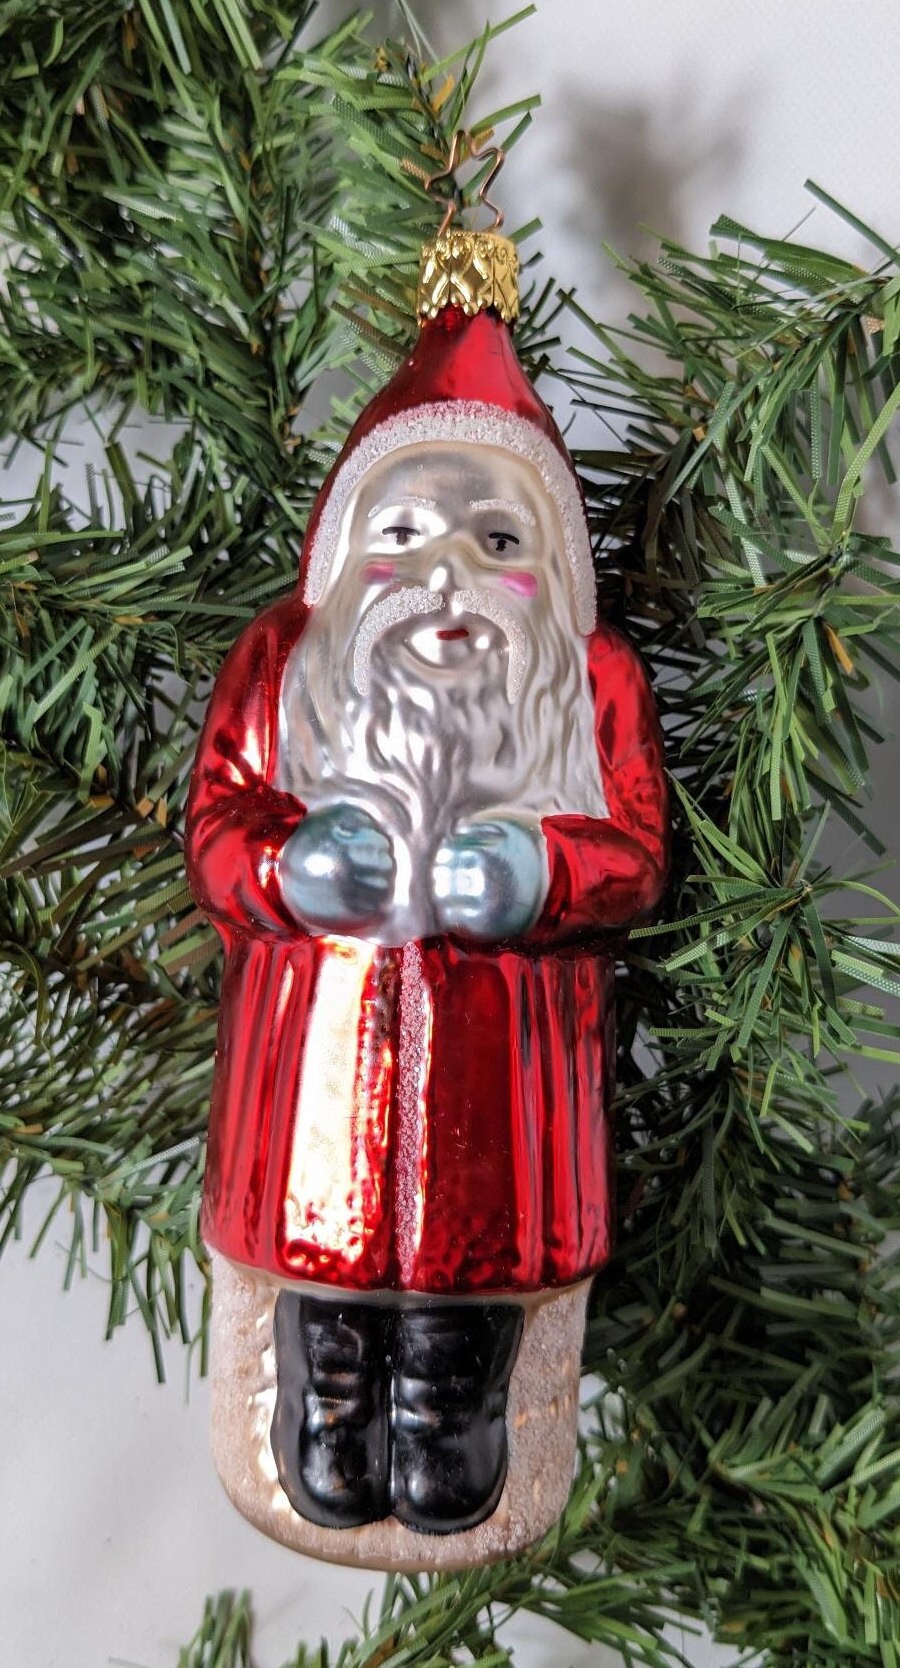 Santa Claus Retired Old World Christmas Inge Glas Belznickel Ornament